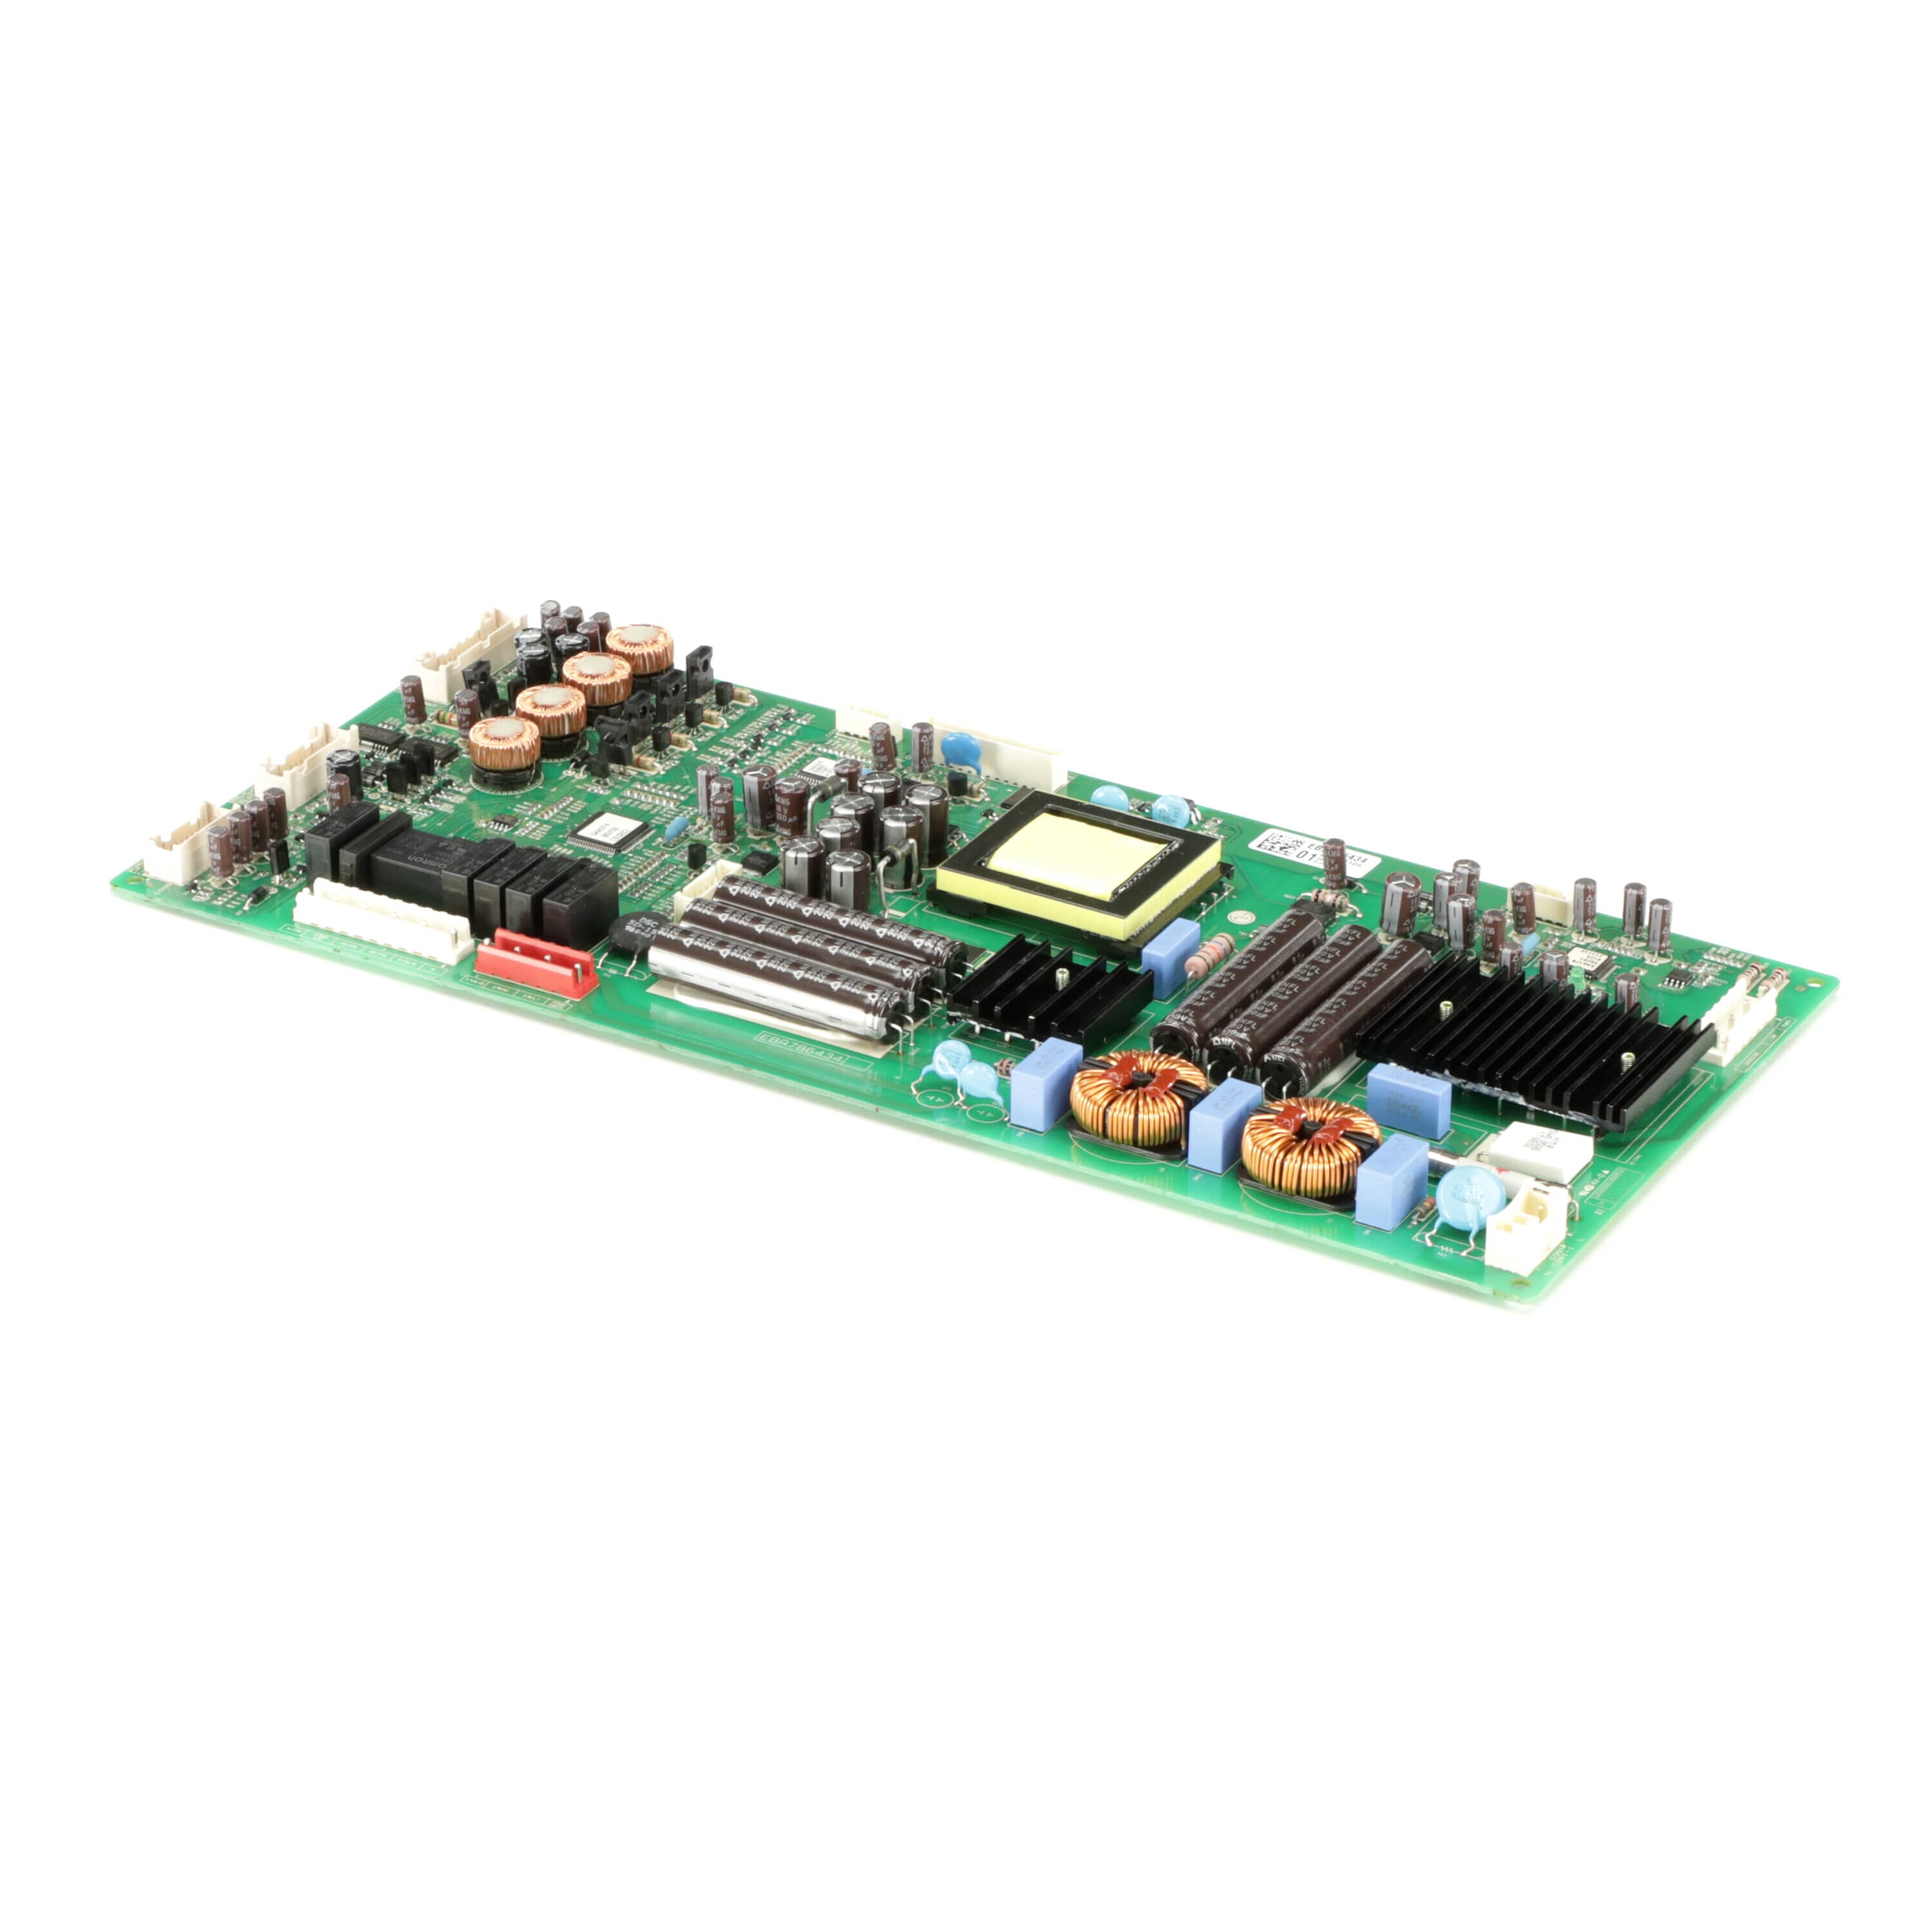 LG EBR78643401 Refrigerator Main PCB Assembly